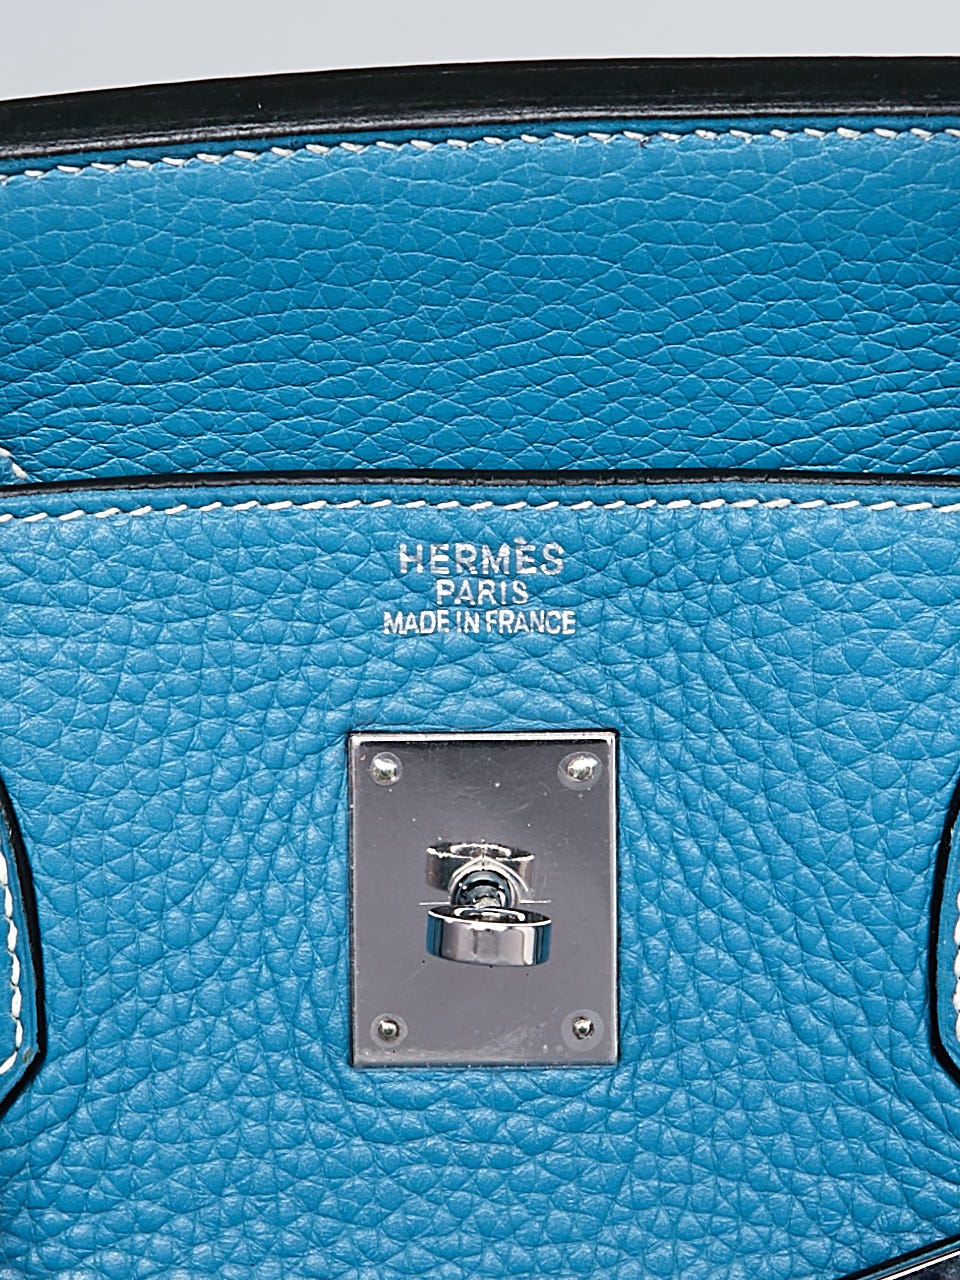 Hermès 40cm Purple Fjord Leather Birkin with Palladium